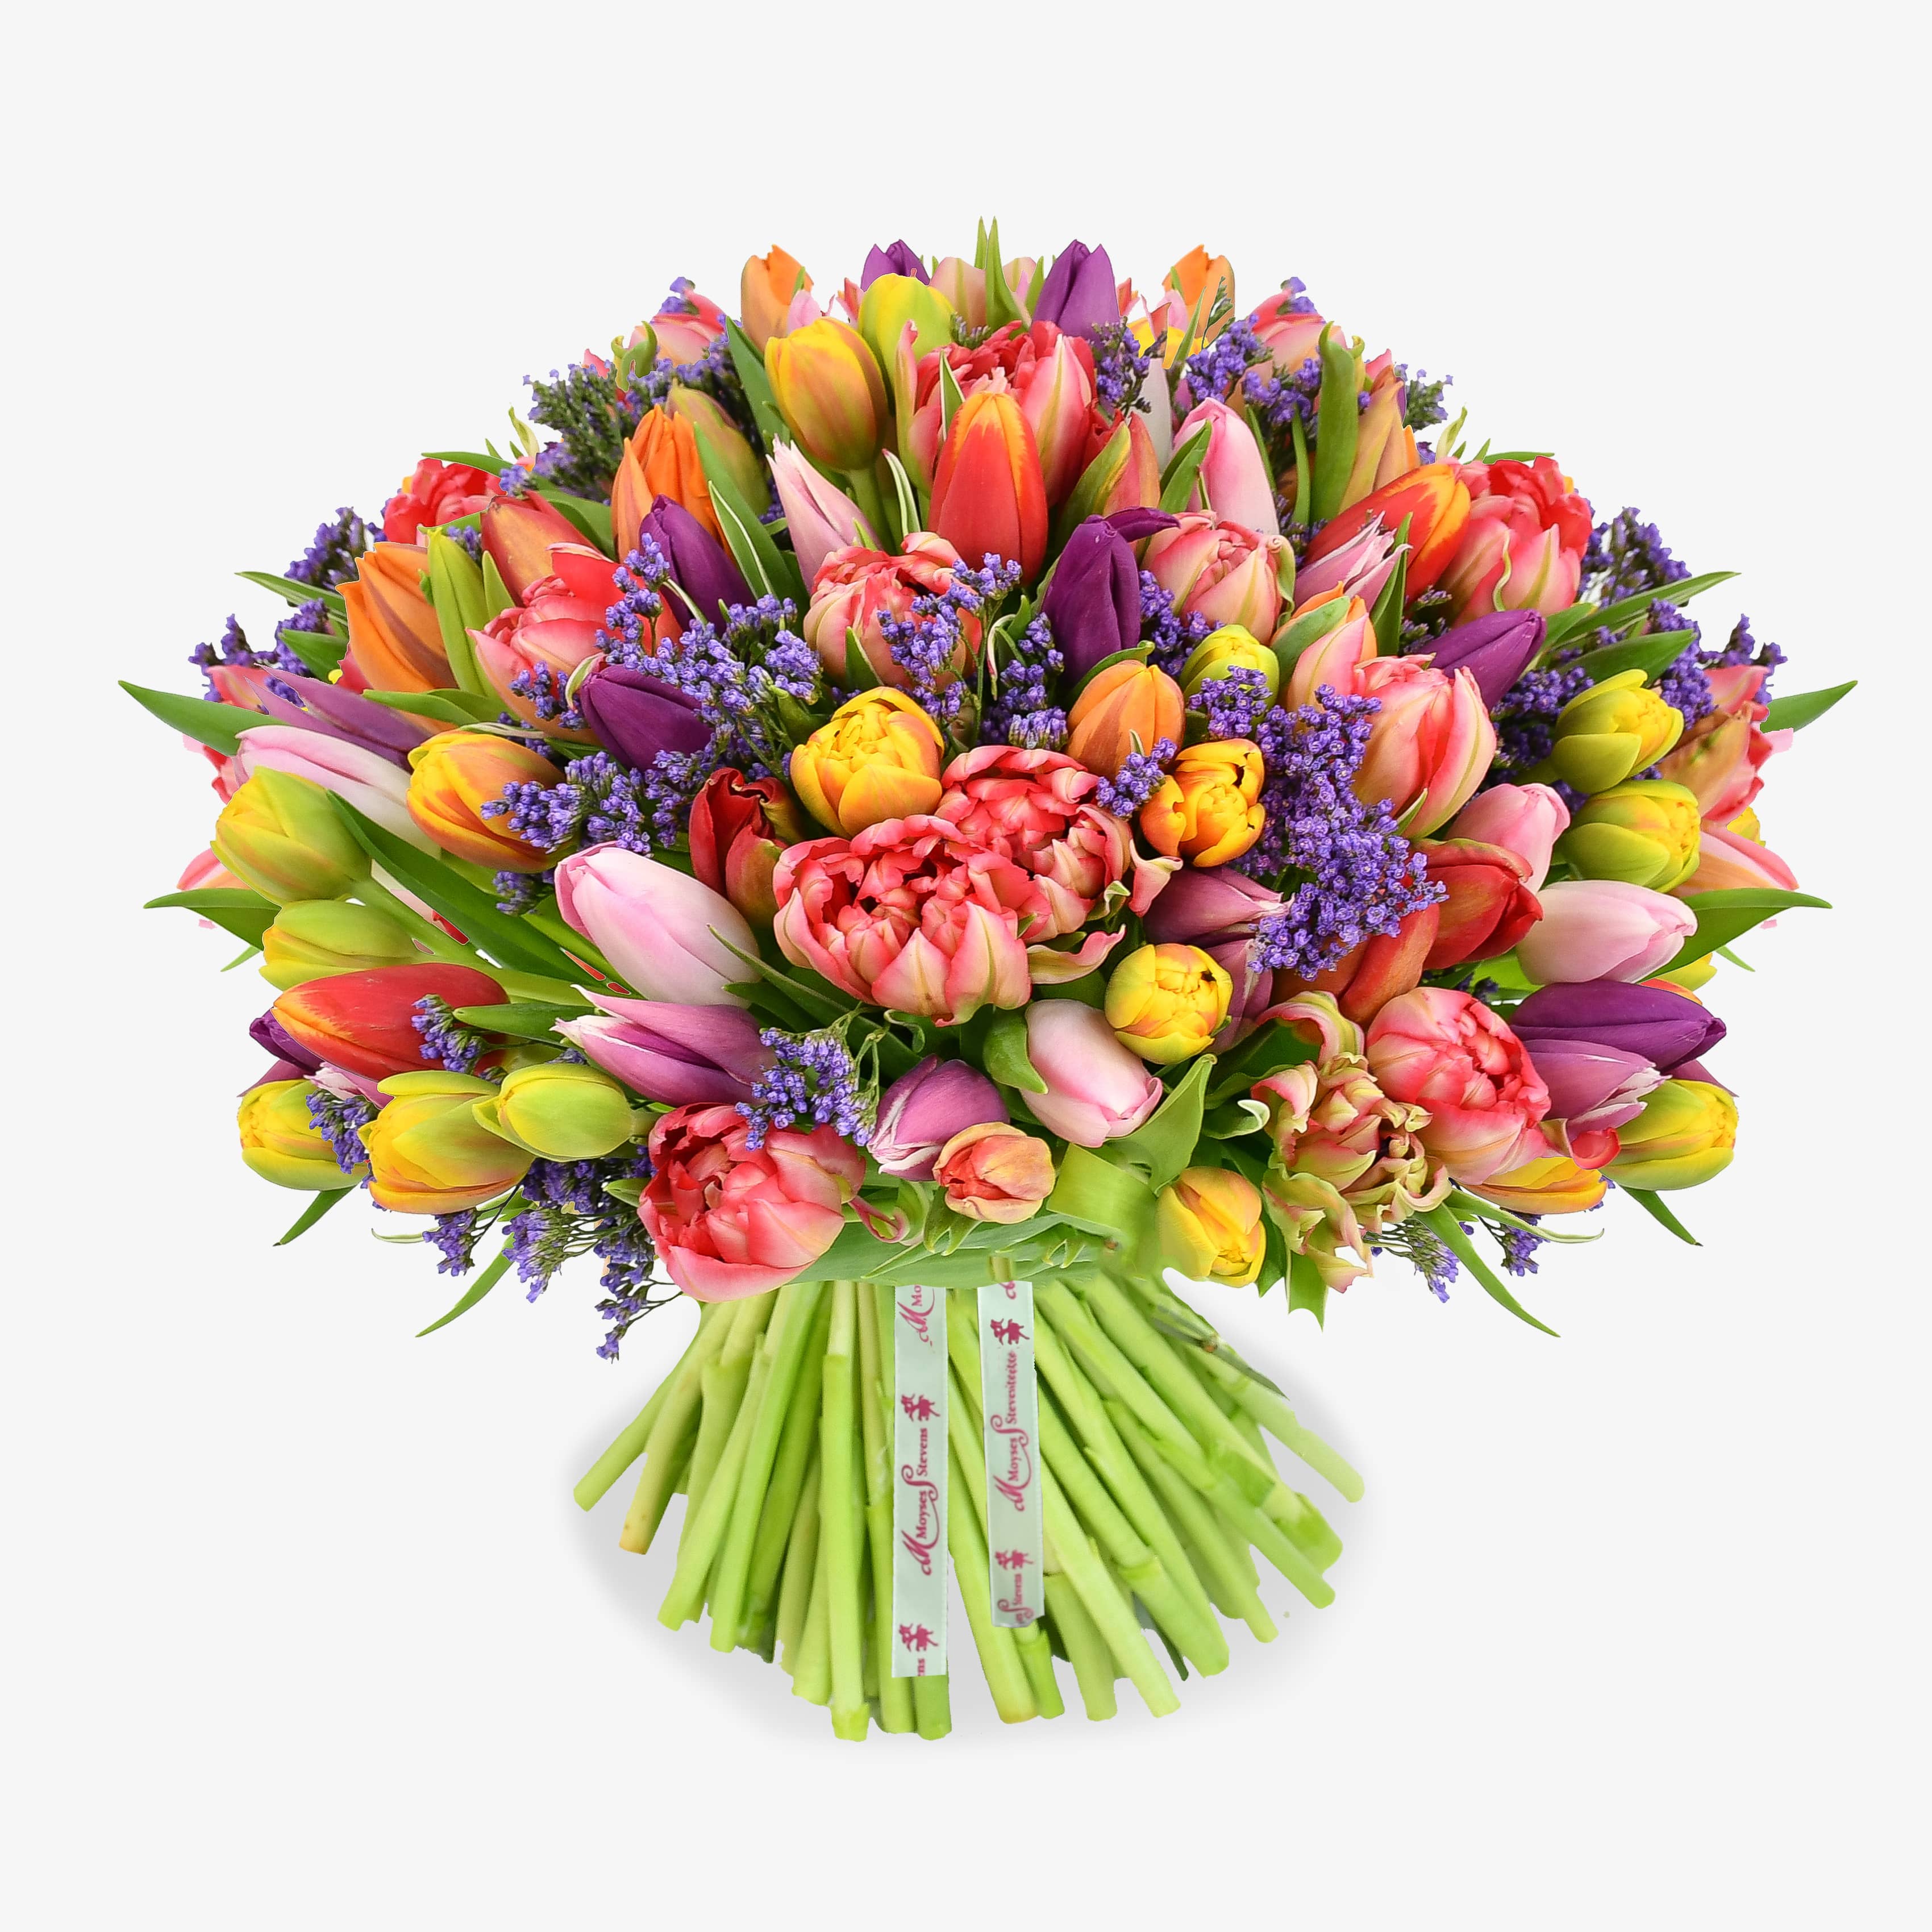 Tropical Tulips image